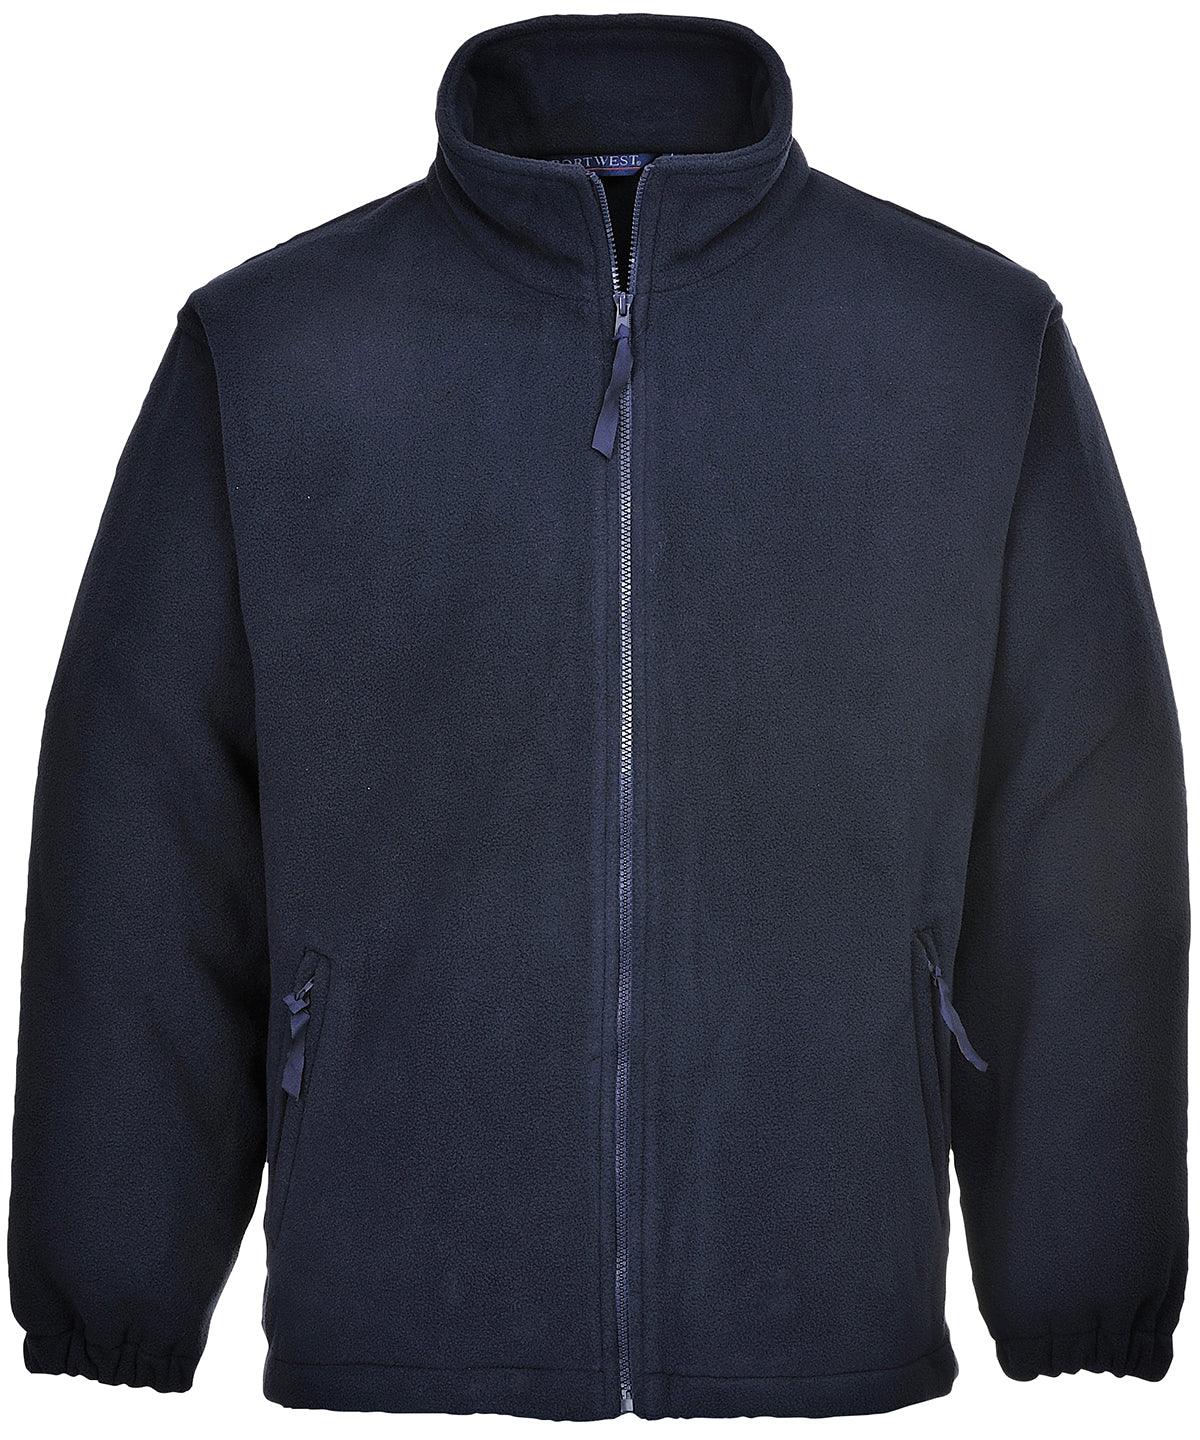 Navy - Aran fleece (F205) Jackets Portwest Jackets & Coats, Jackets - Fleece, Plus Sizes, Workwear Schoolwear Centres